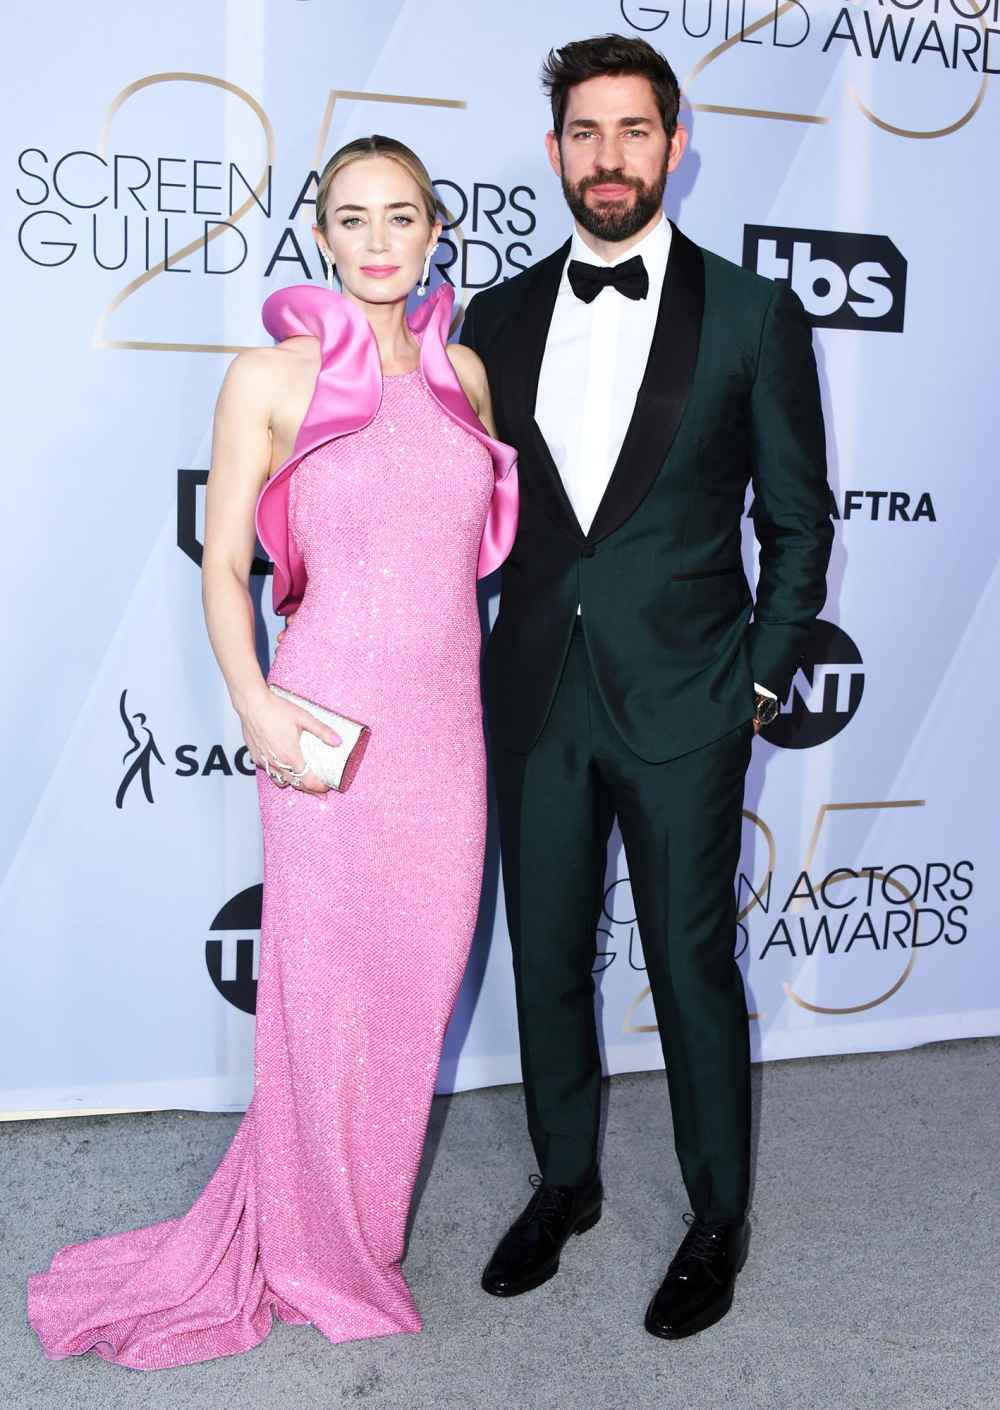 SAG Awards 2019 Emily Blunt and John Krasinski